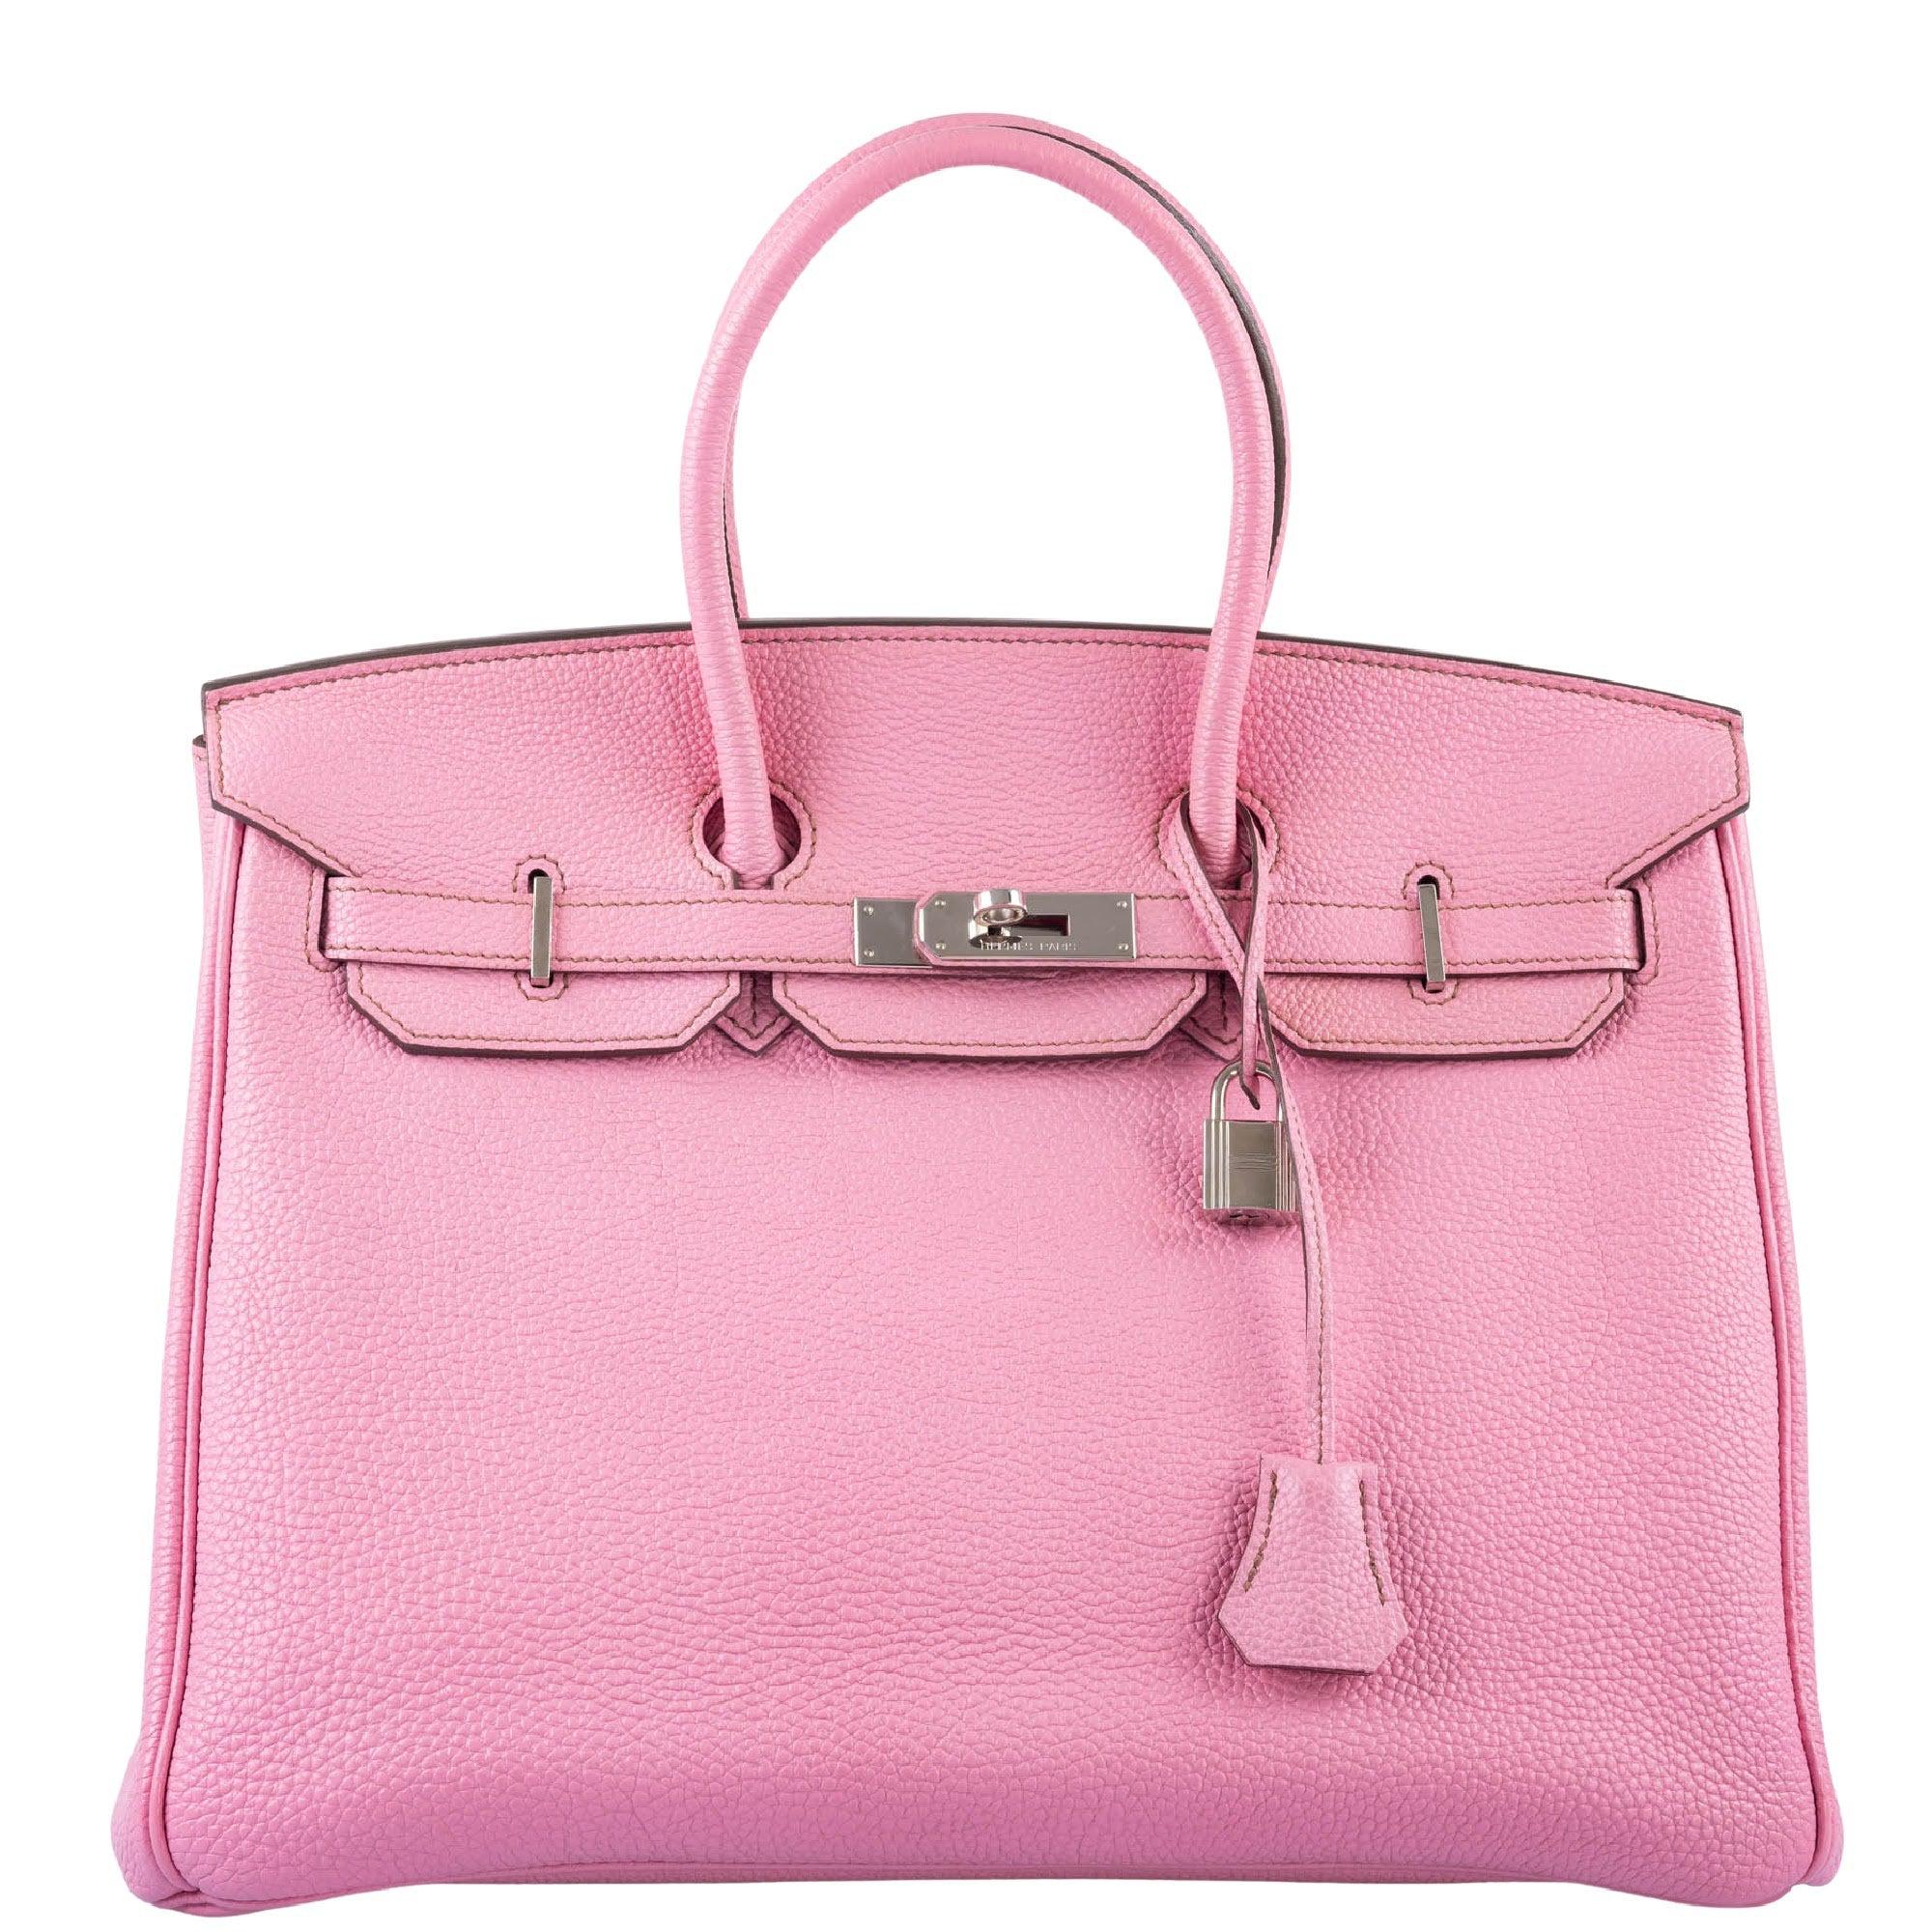 Hermes Birkin Bag, Rose Tyrien Pink, 35cm, Epsom with palladium